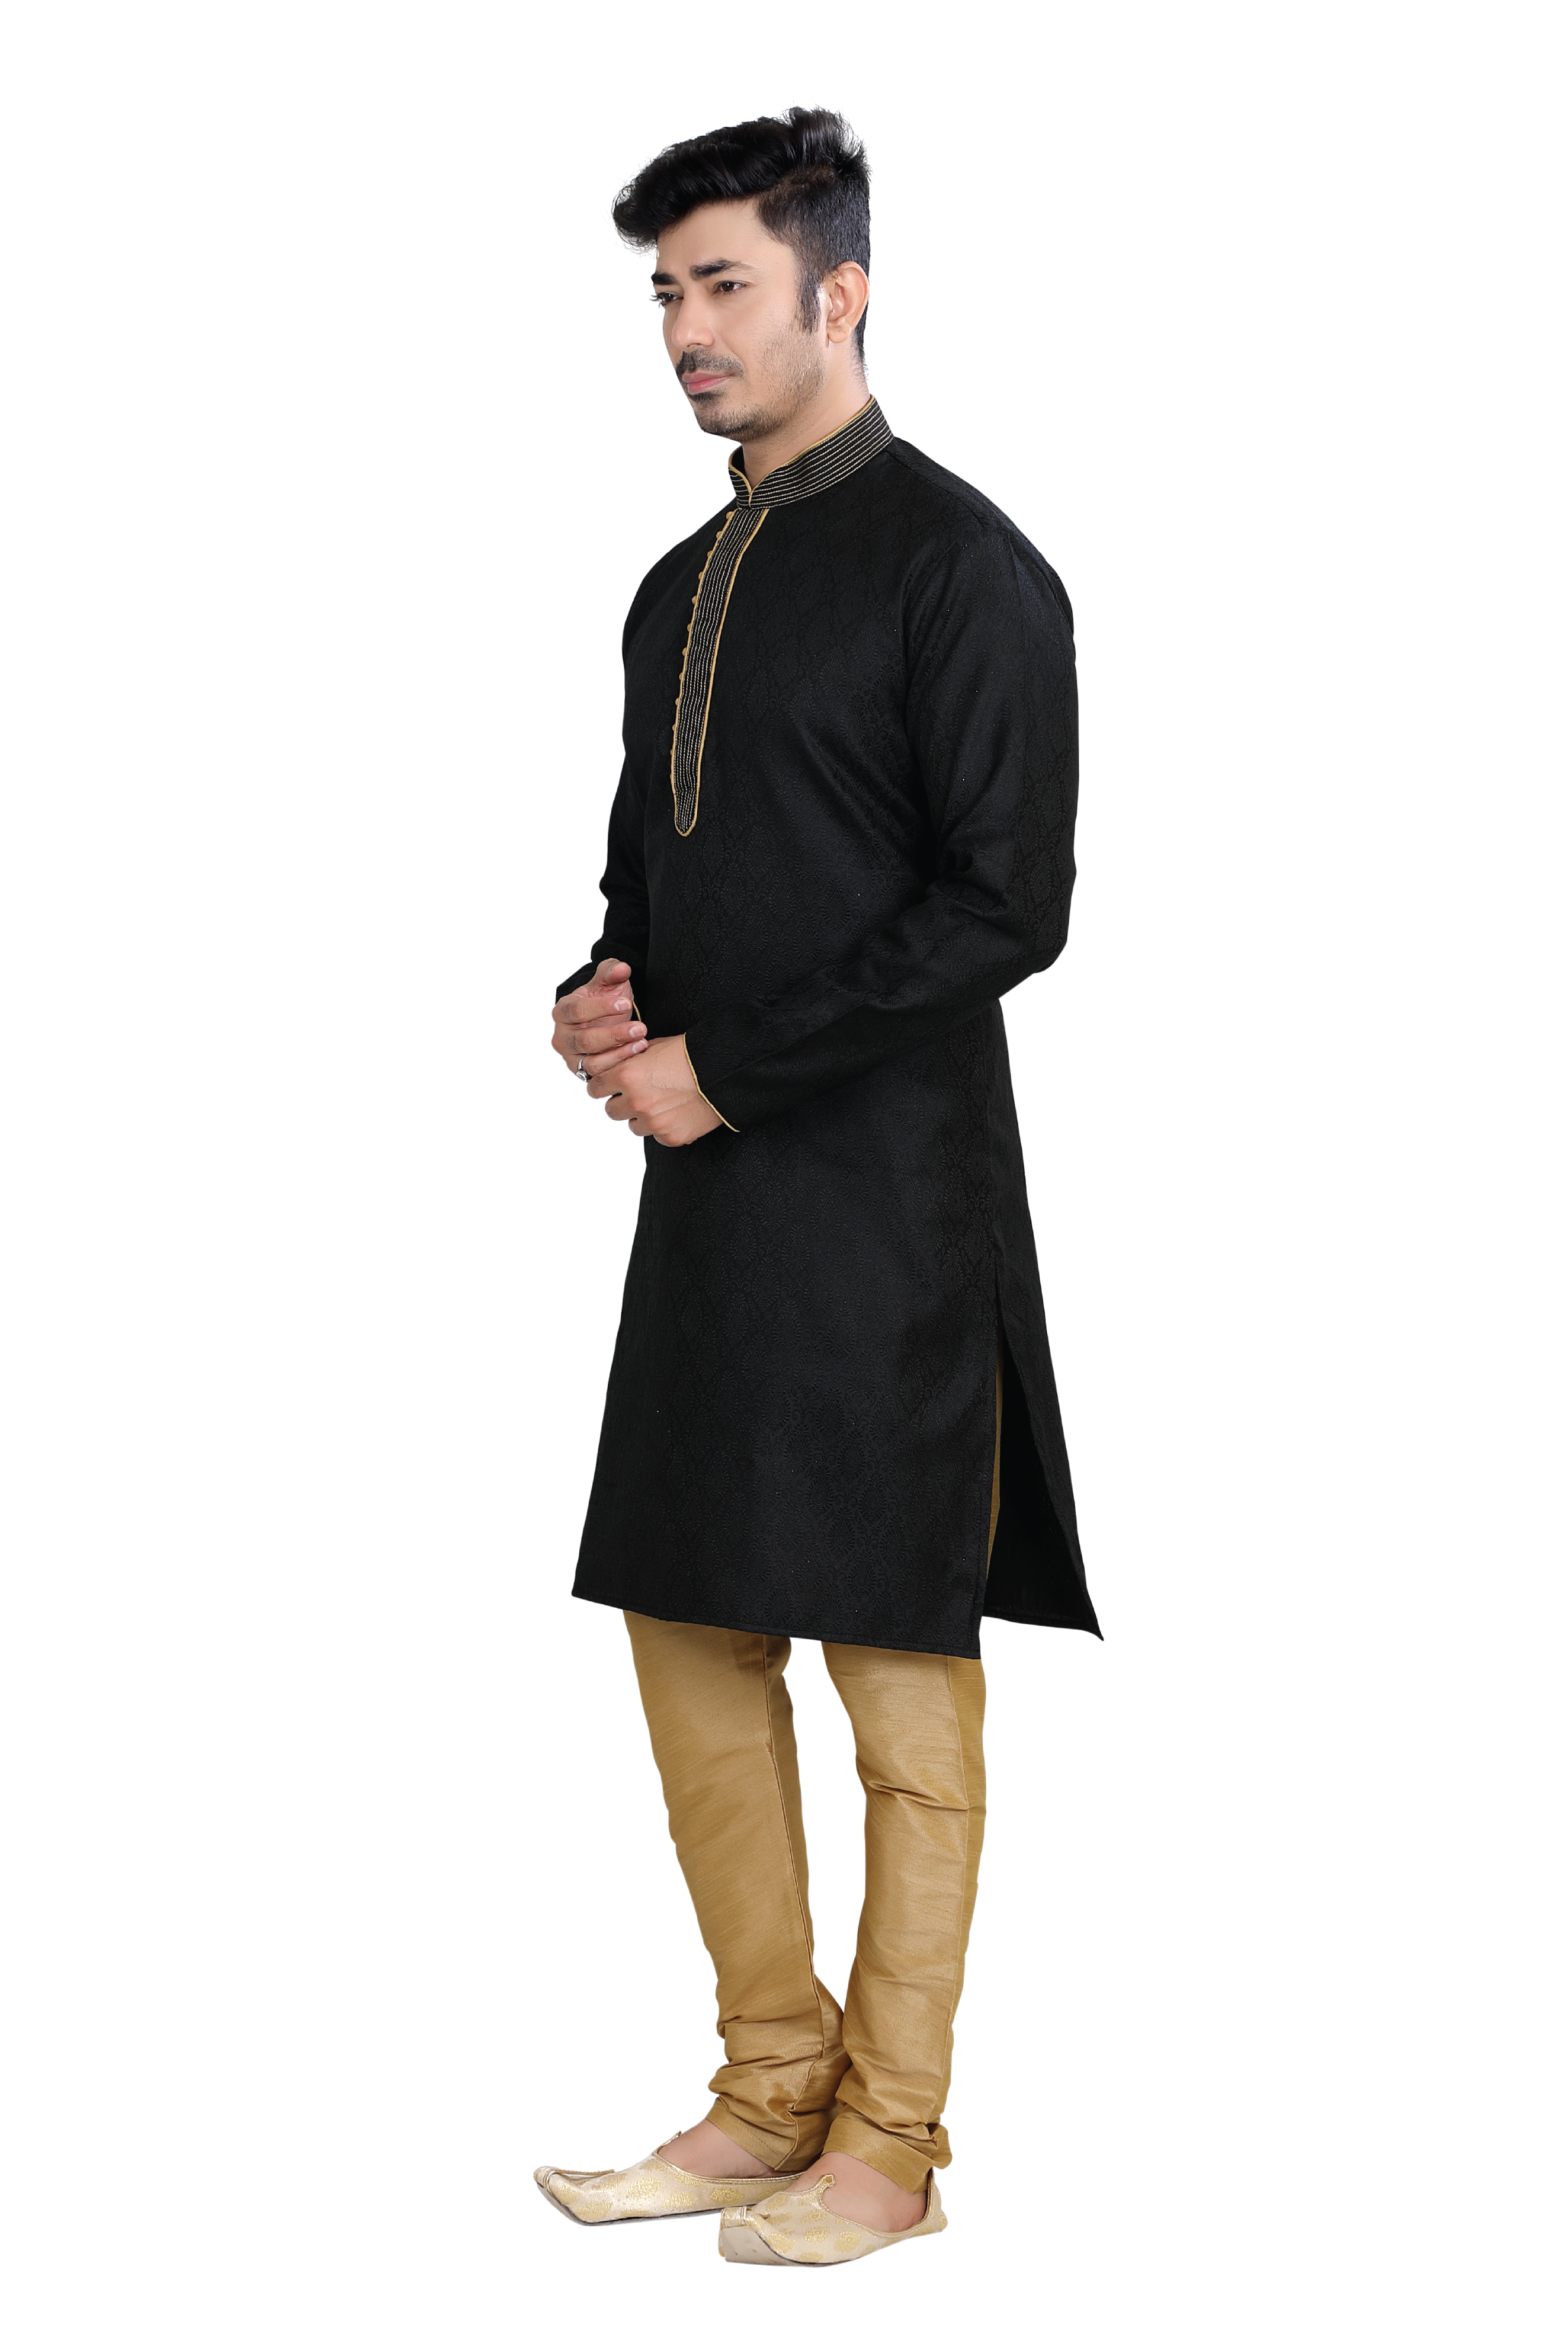 Anchor Embroidery  Banarasi Soft Silk Kurta Pajama in Black Color - Premium kurta pajama from Dapper Ethnic - Just $119! Shop now at Dulhan Exclusives